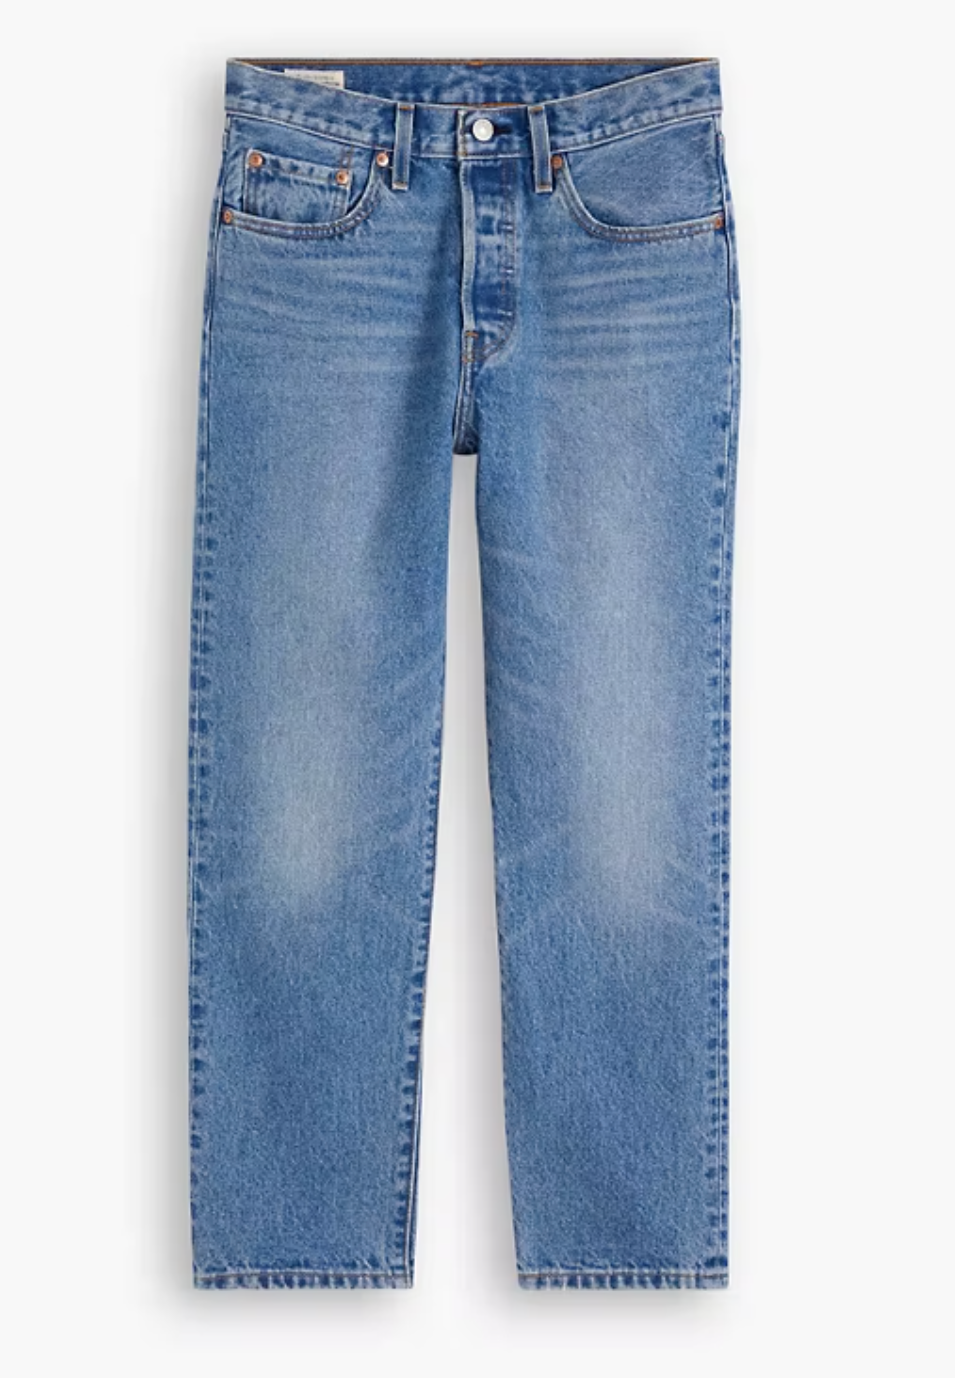 The 501 Original Crop Jeans by Levi's - Medium Indigo